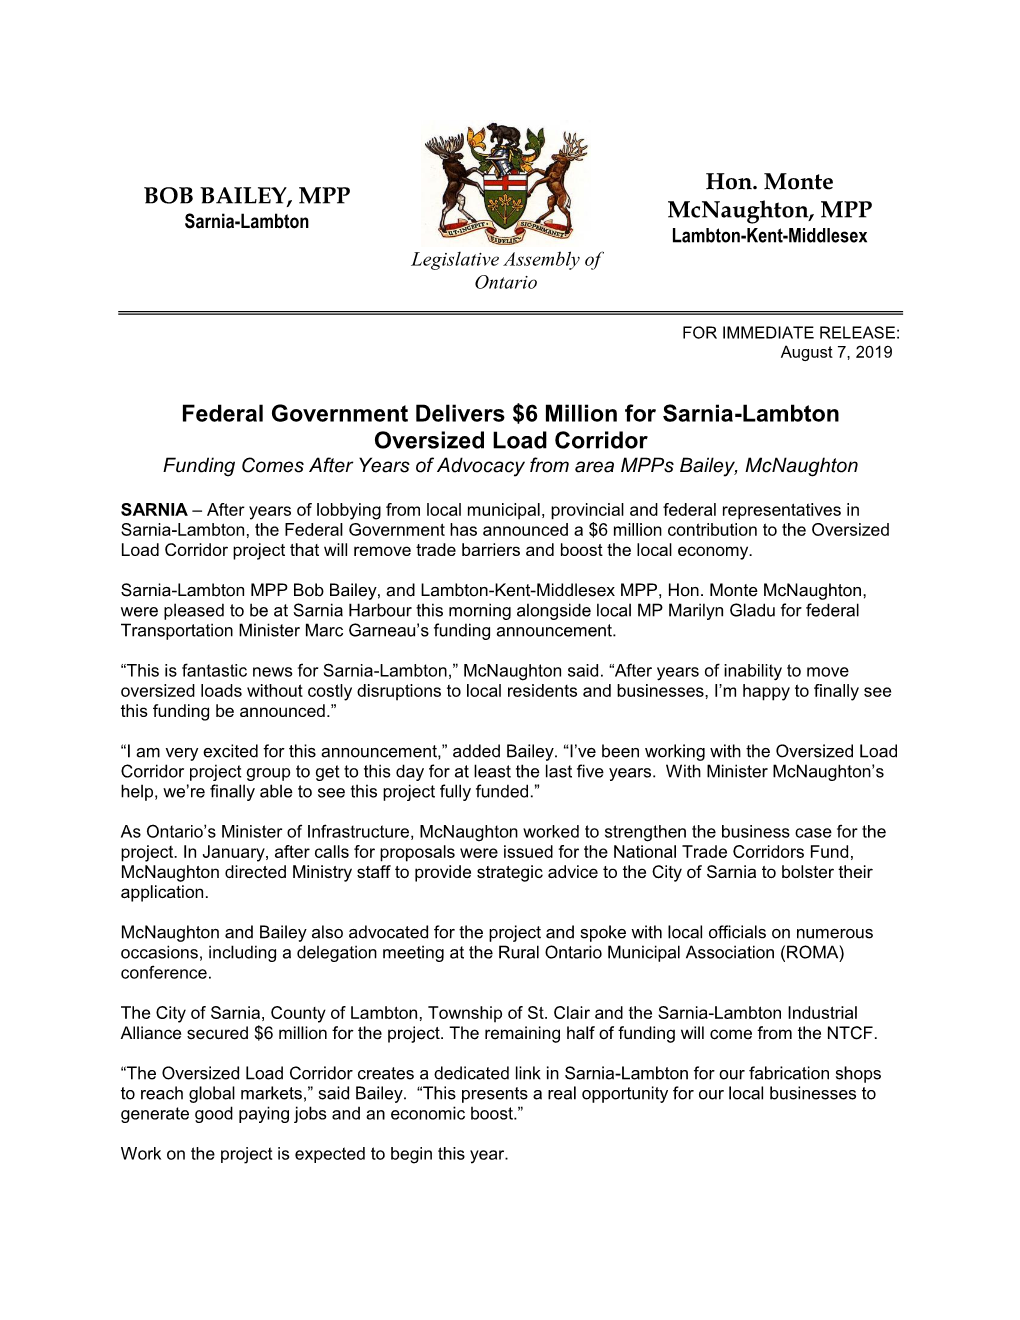 BOB BAILEY, MPP Hon. Monte Mcnaughton, MPP Federal Government Delivers $6 Million for Sarnia-Lambton Oversized Load Corridor